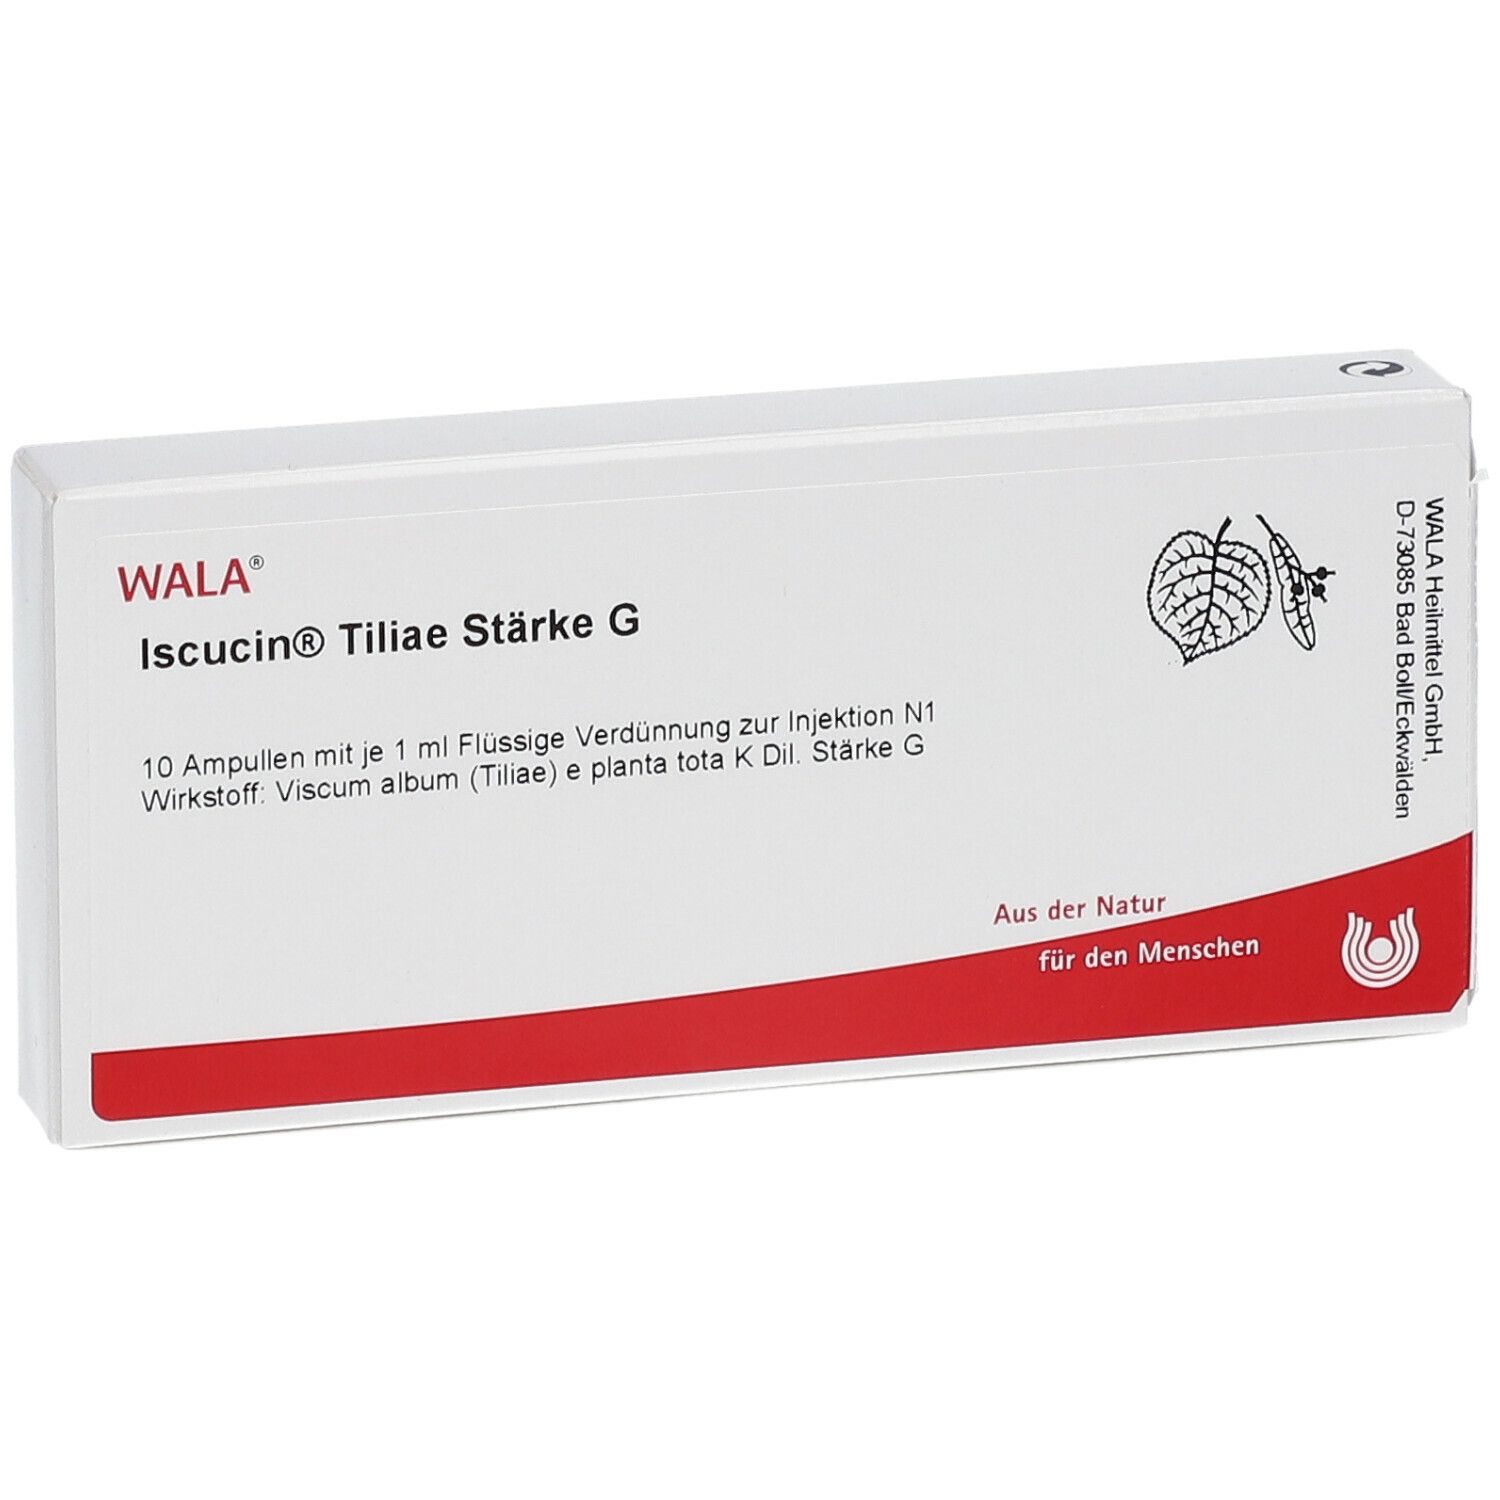 WALA® Iscucin Tiliae St.G Amp.